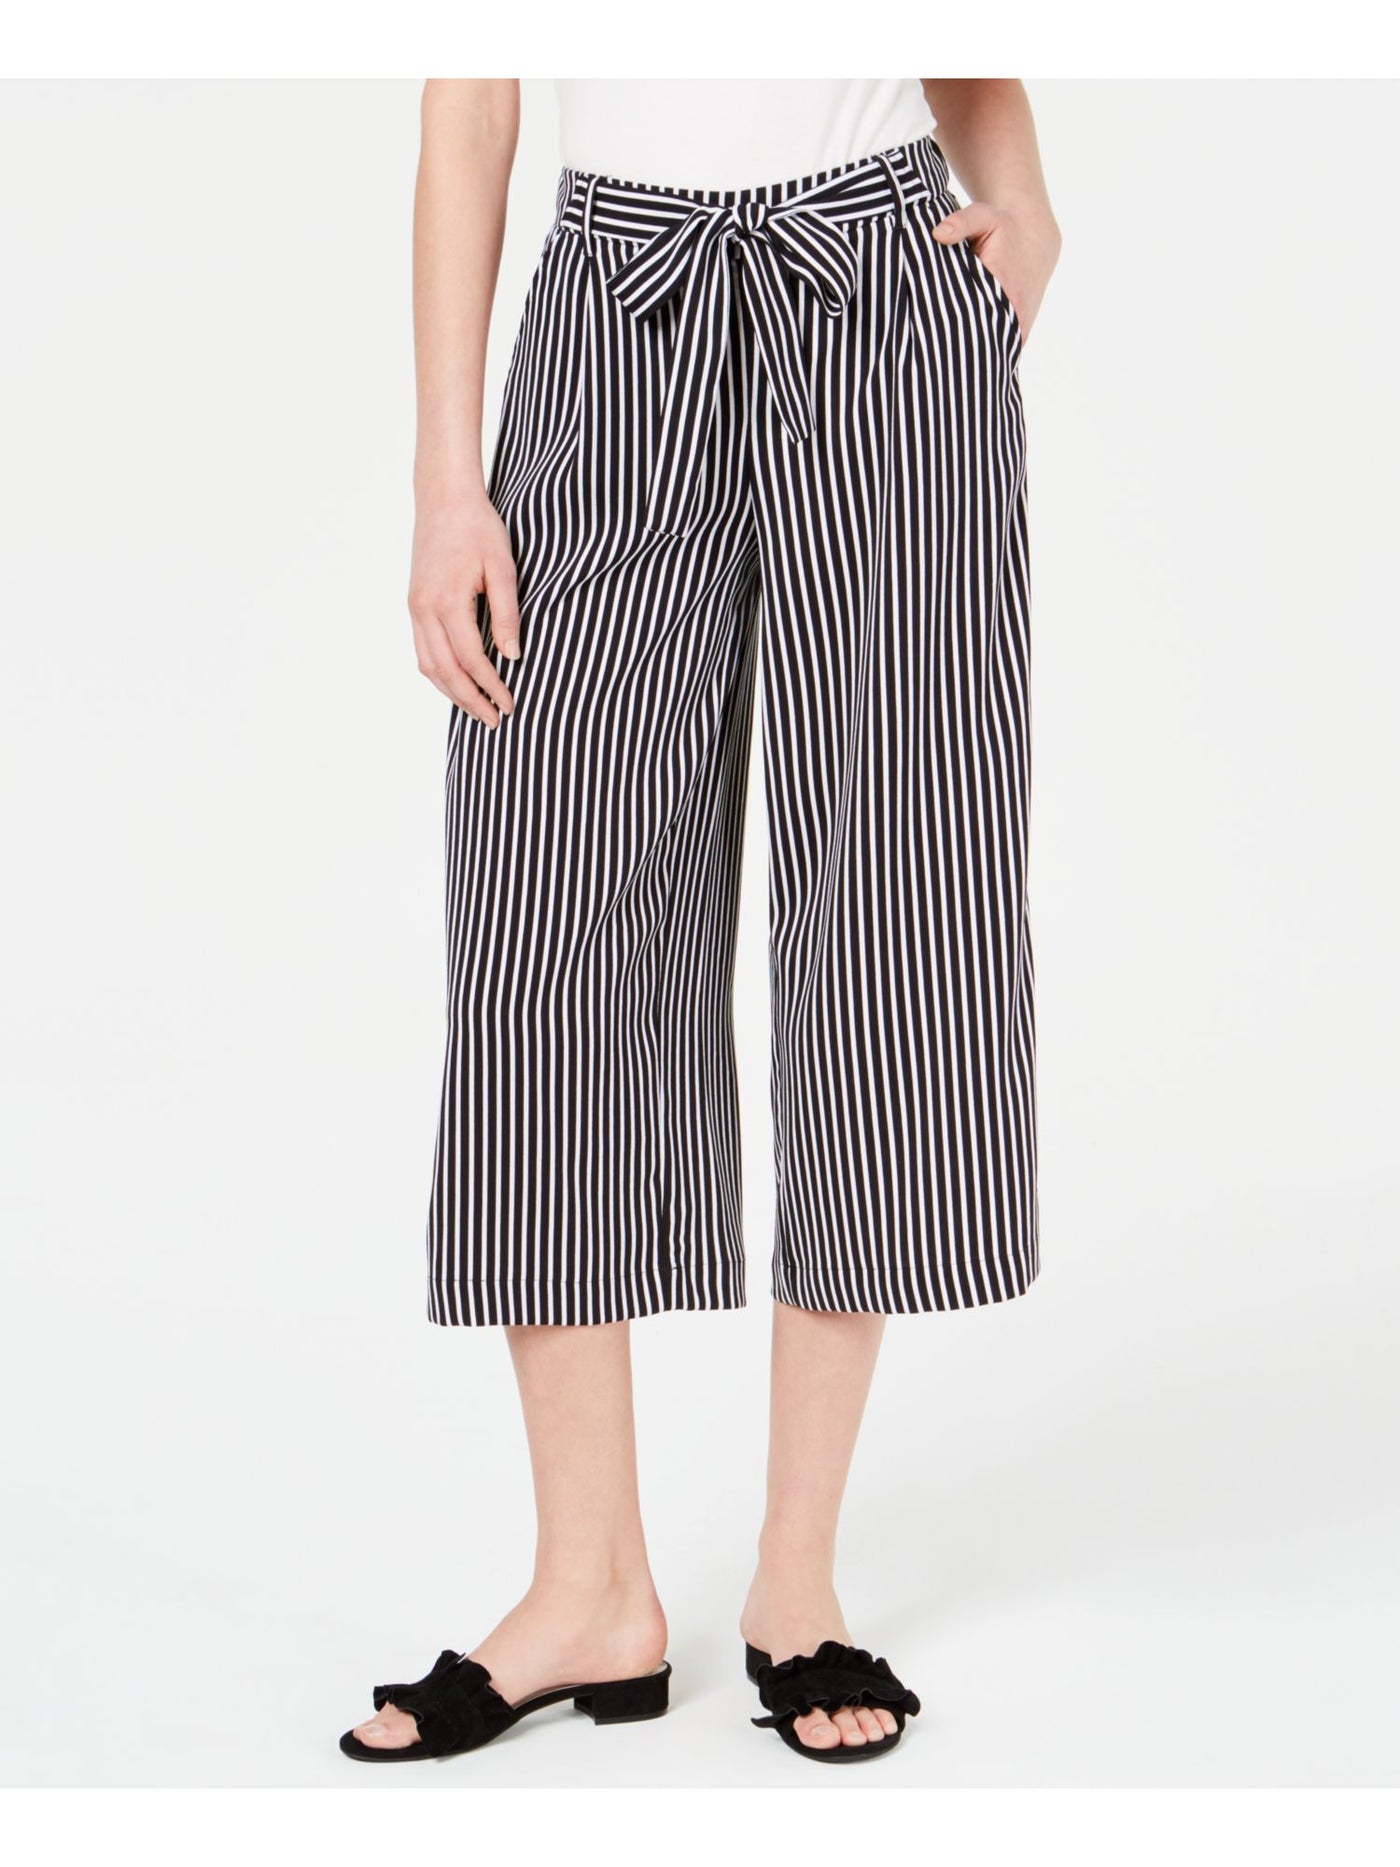 MAISON JULES Womens Black Striped Wear To Work Capri Pants S